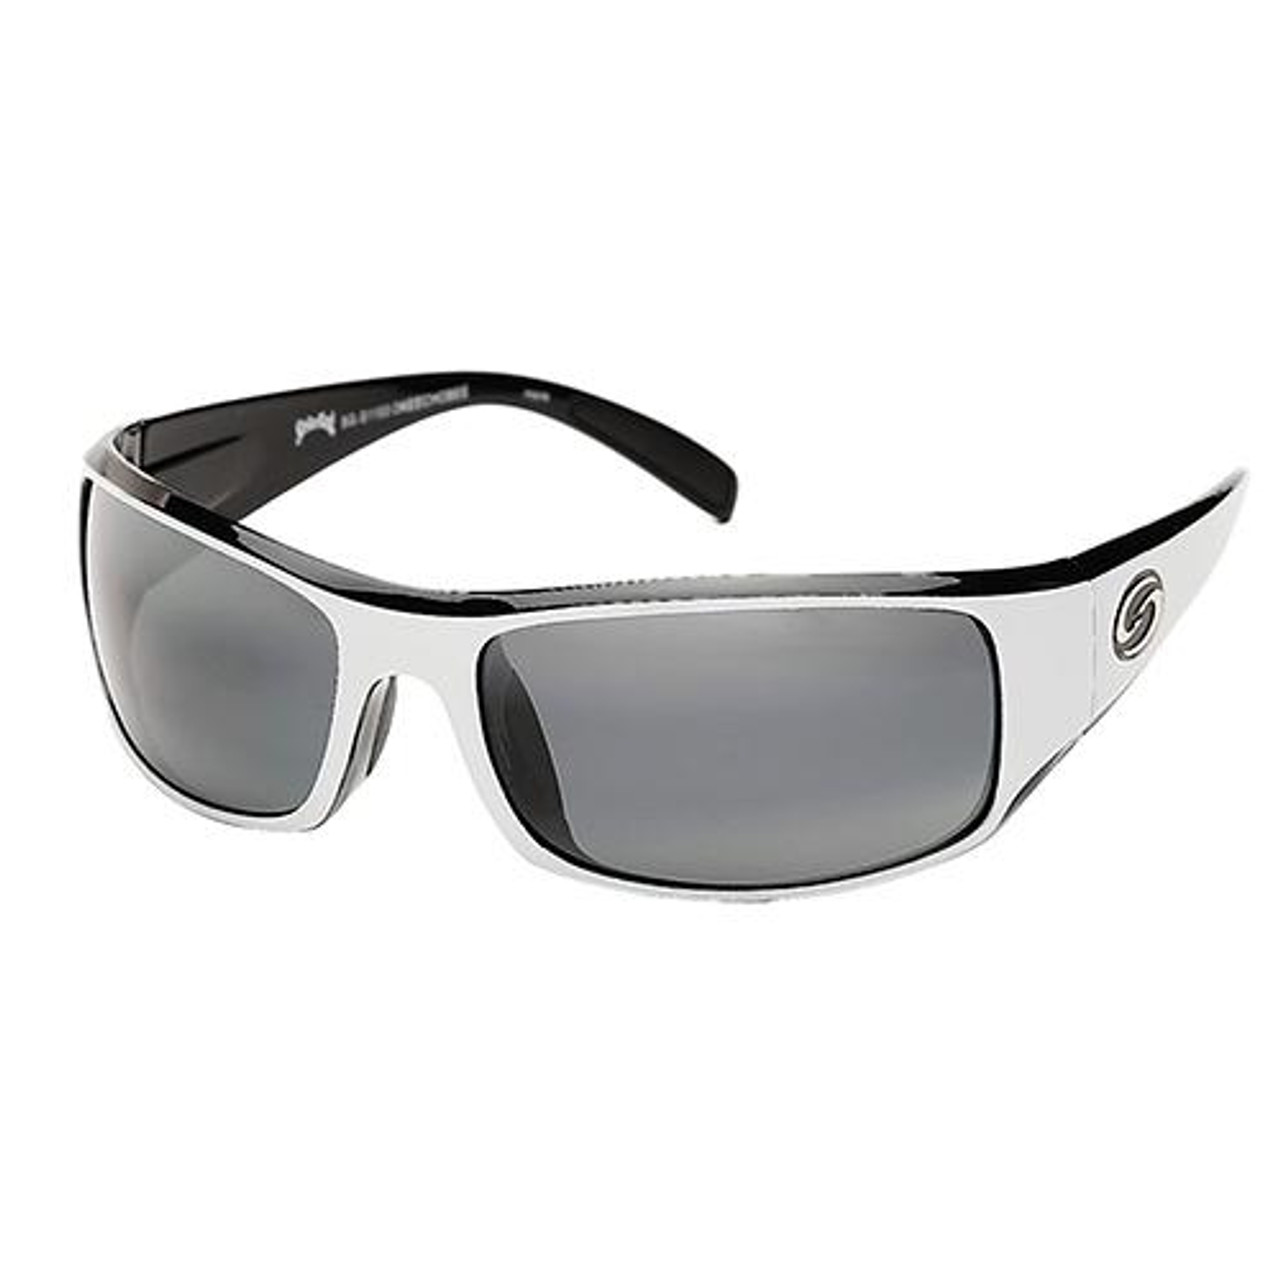 Strike King Lures S11 Optics Sunglasses Okeechobee Style